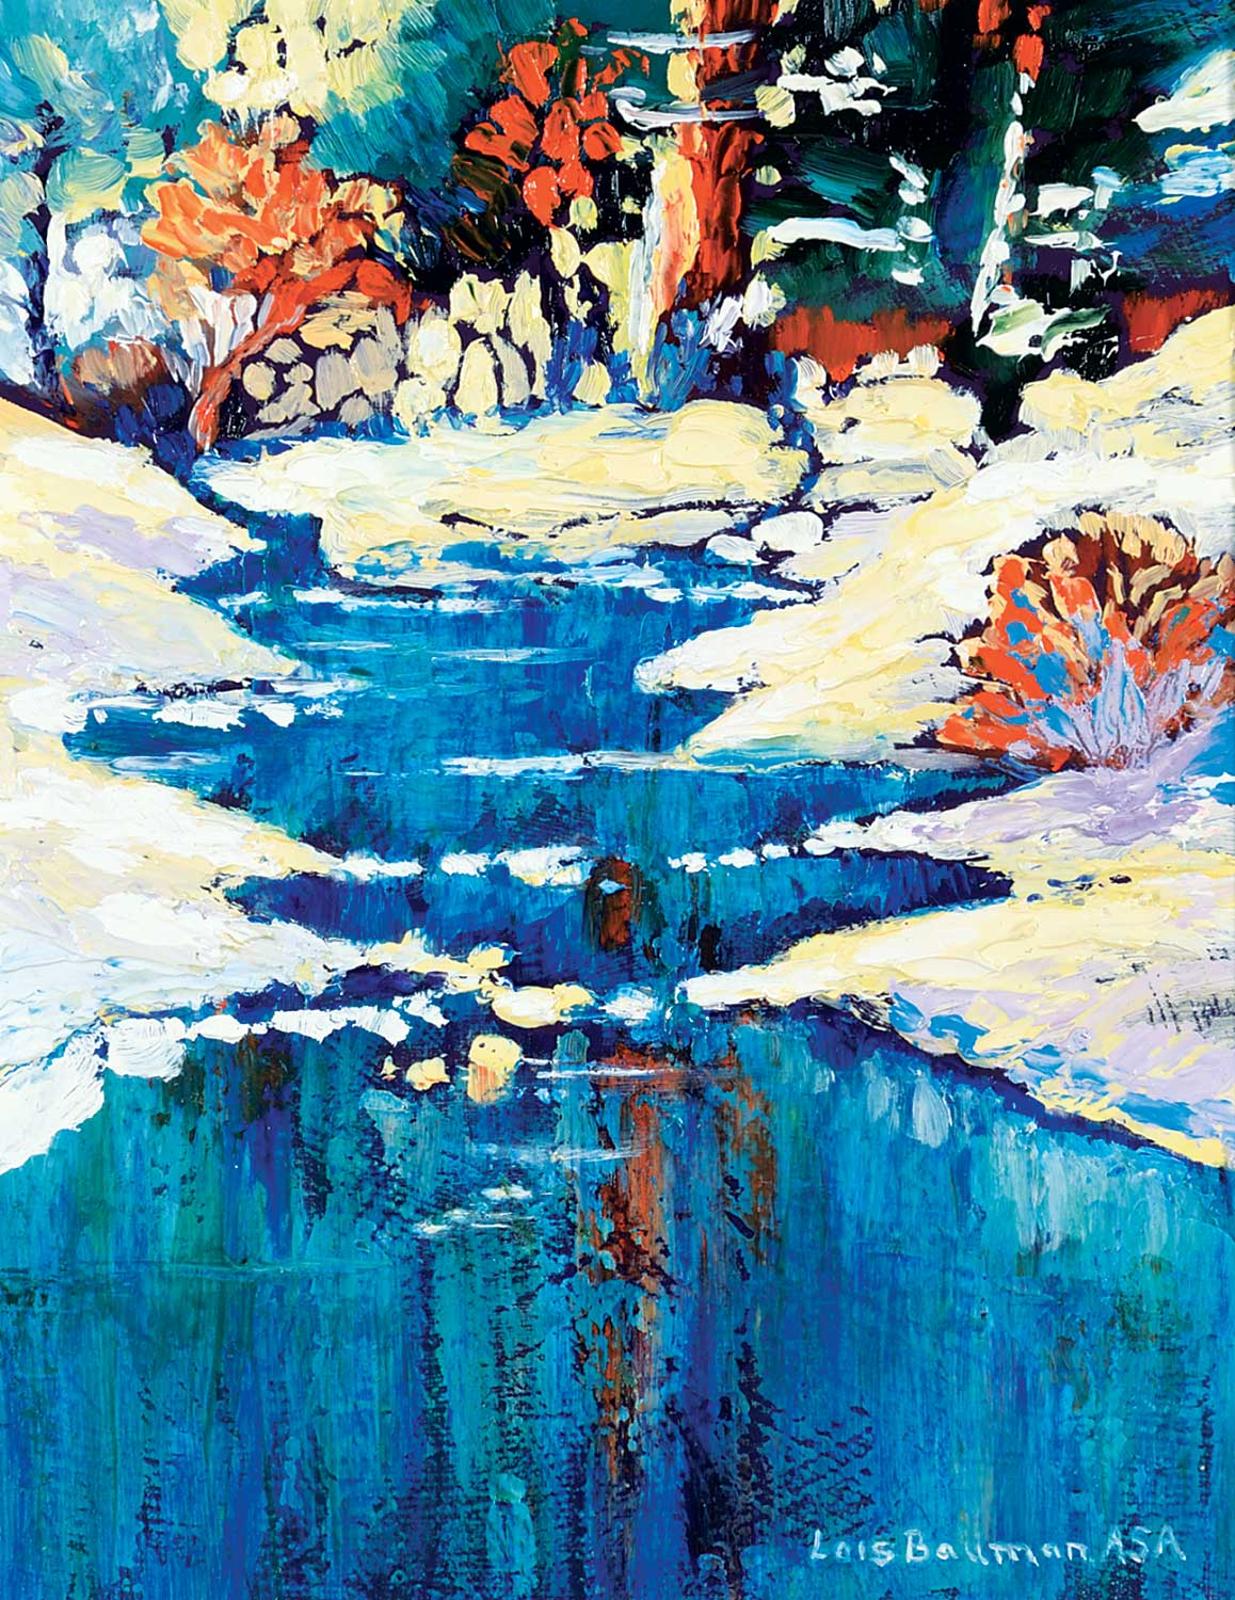 Lois Bauman (1943) - Policeman's Creek, Alberta